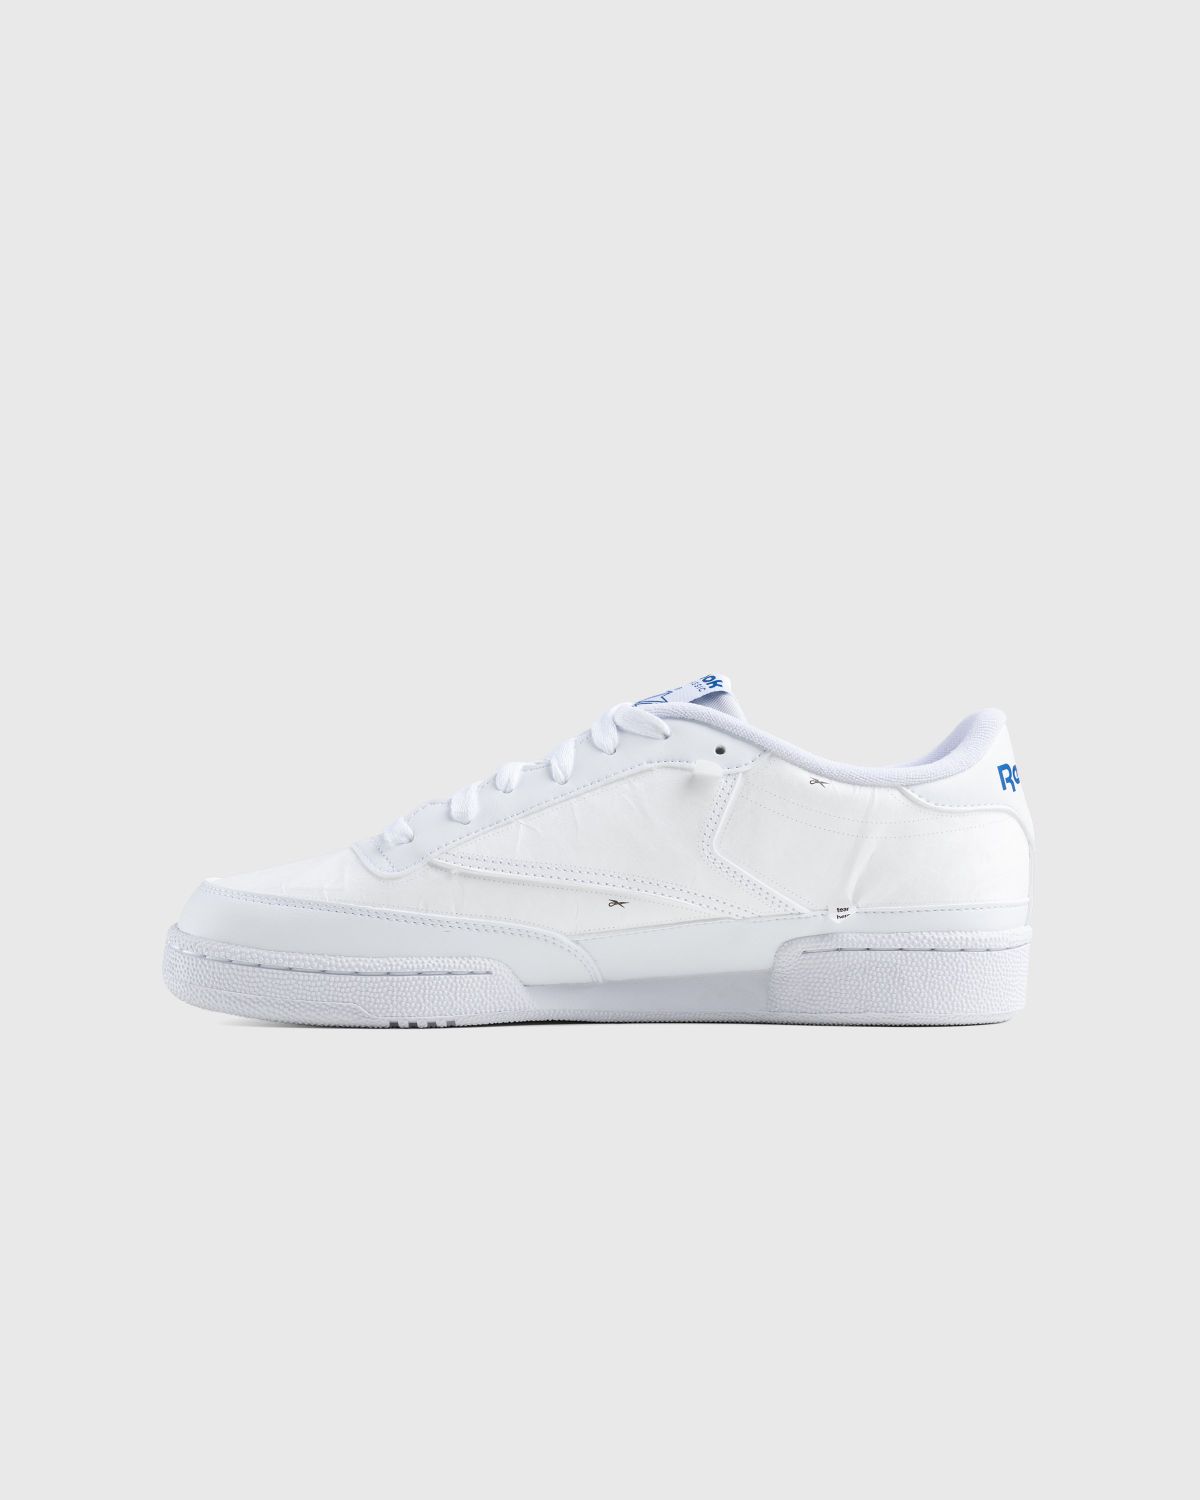 Reebok – Club C 85 x U White - Low Top Sneakers - White - Image 3